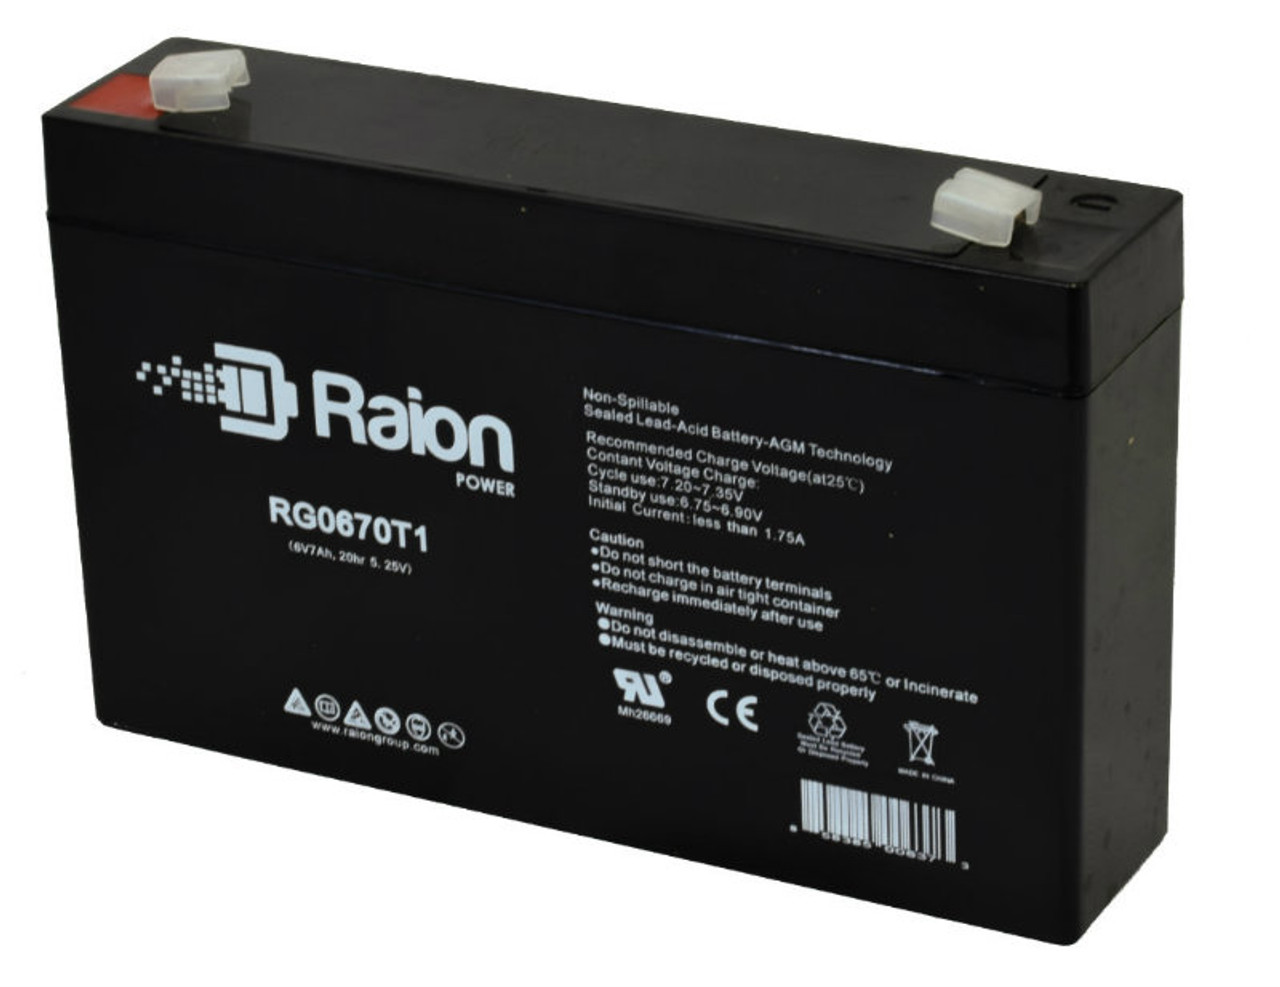 Raion Power RG0670T1 6V 7Ah Replacement Battery Cartridge for Alaris Medical PC1 GEMINI INFUSION PUMP CNTRLR Medical Equipment